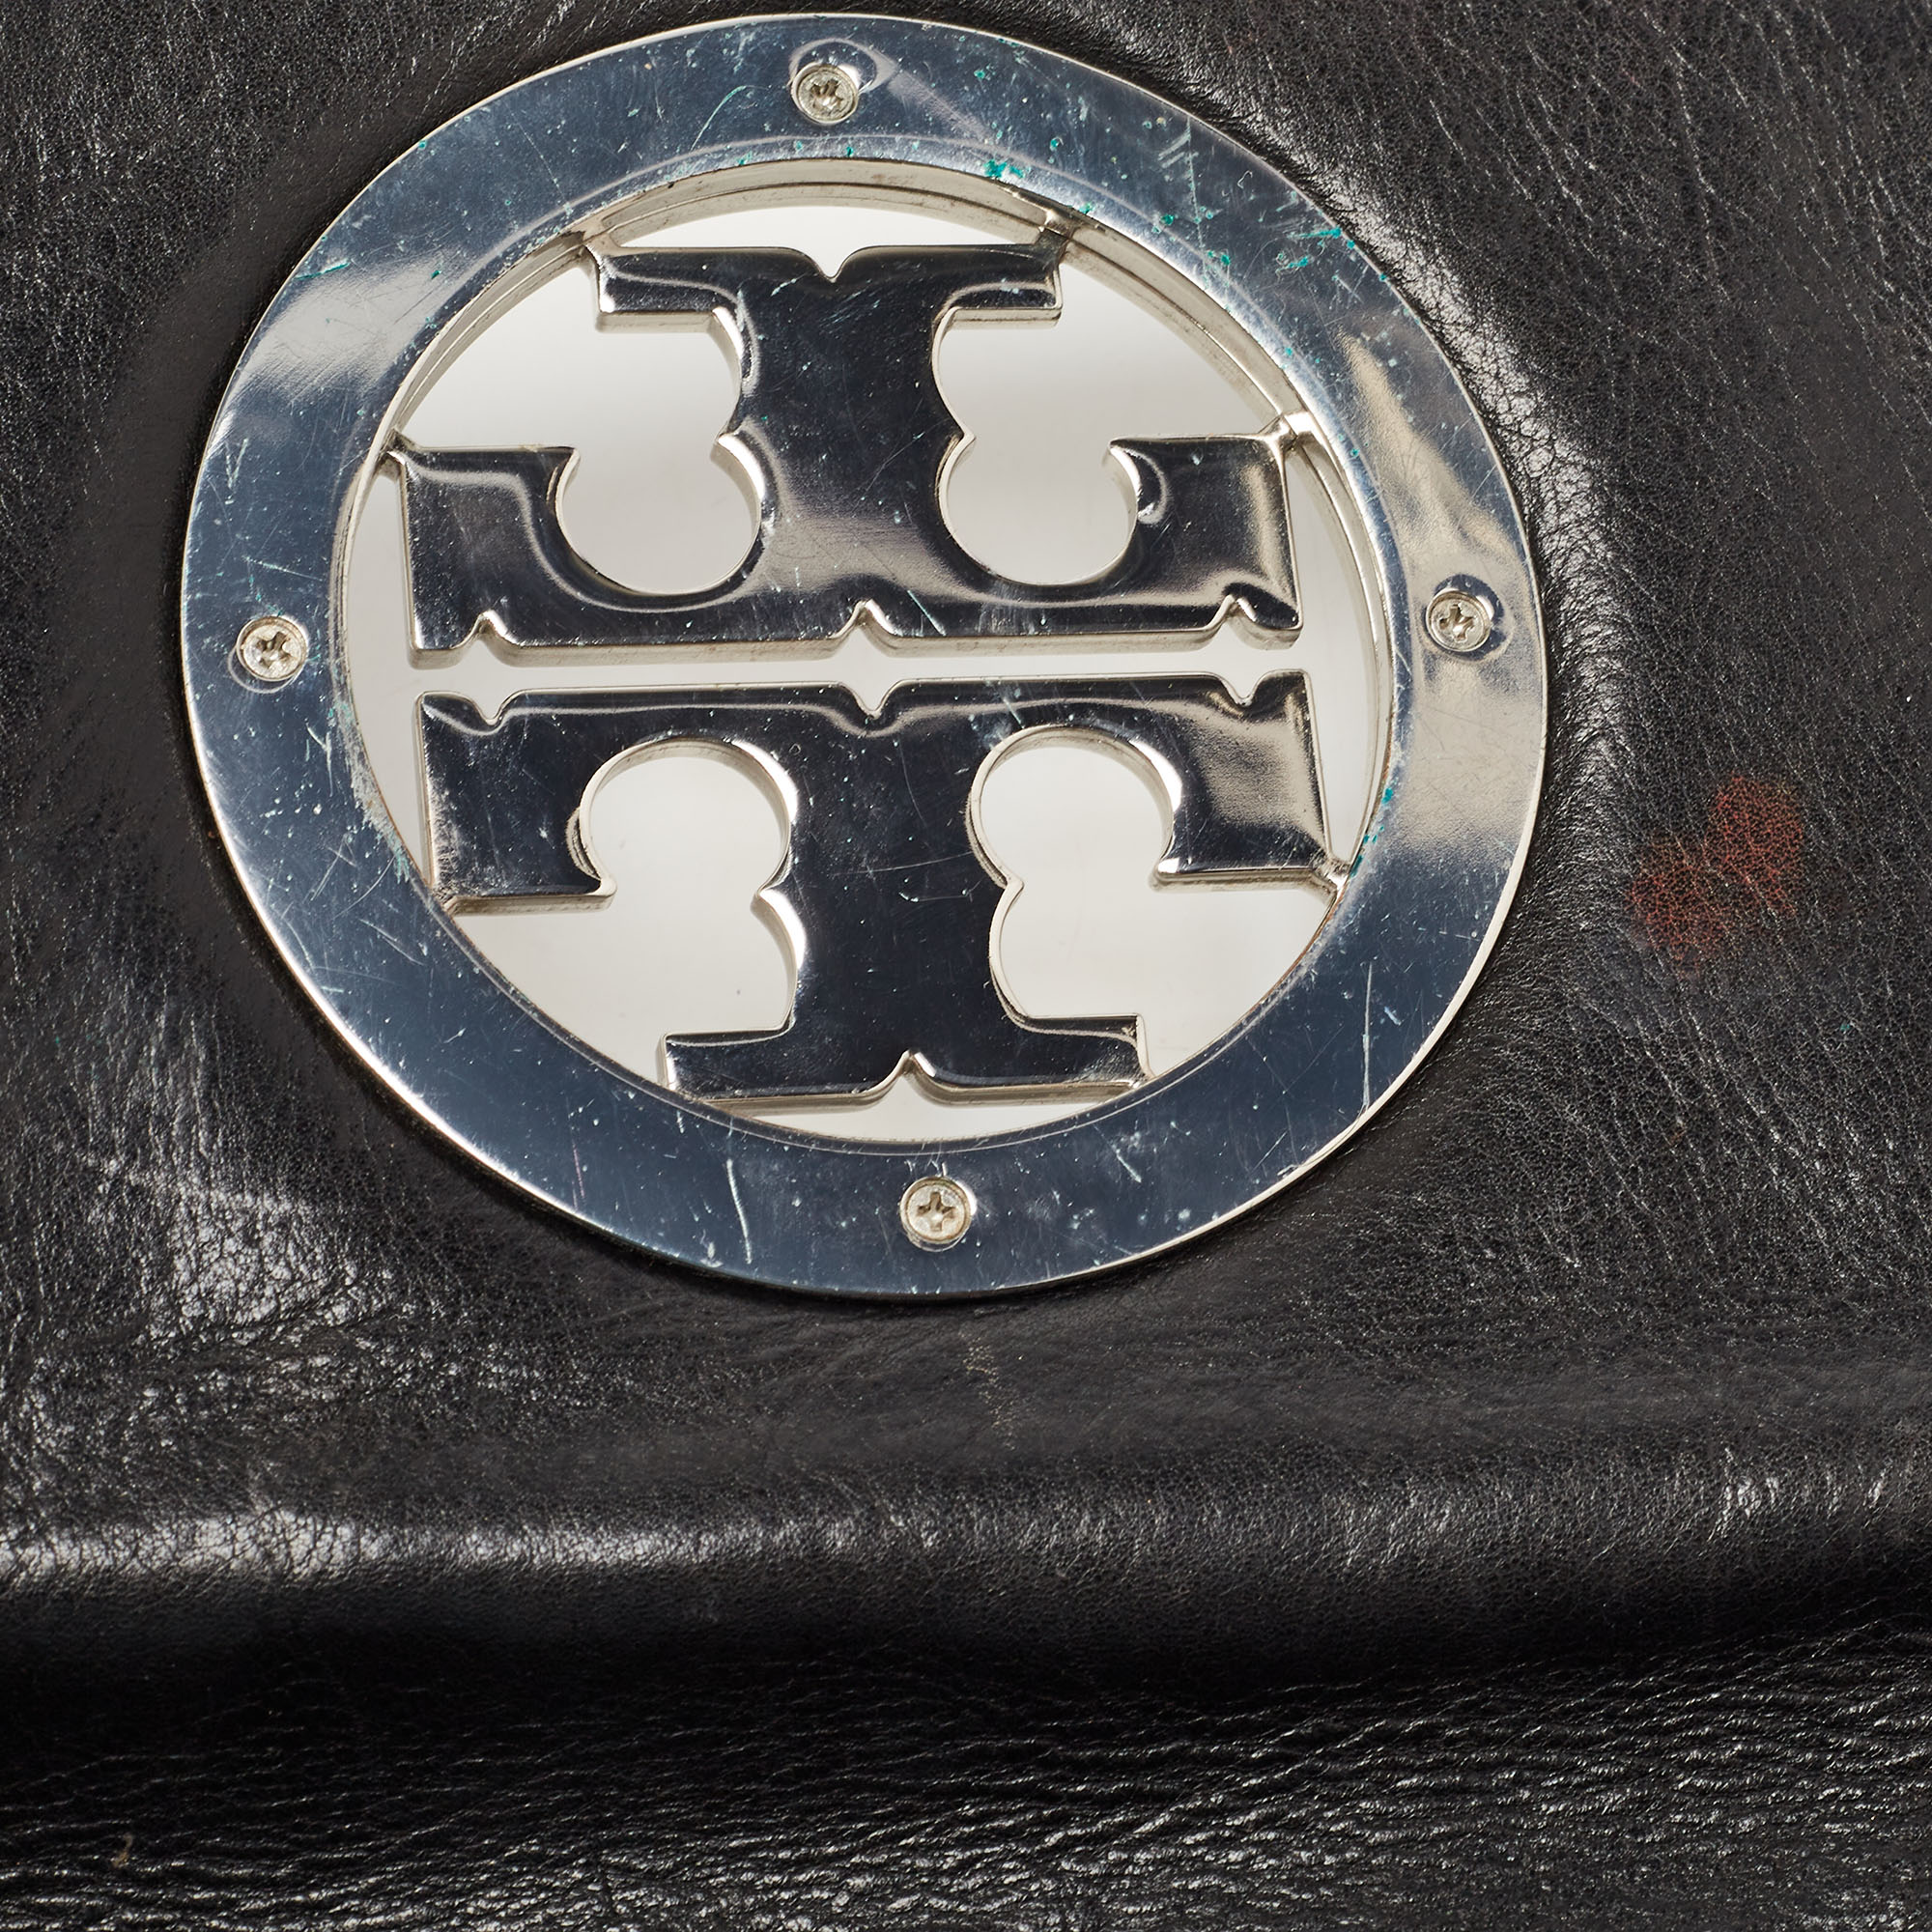 Tory Burch Black Leather Reva Logo Crossbody Bag